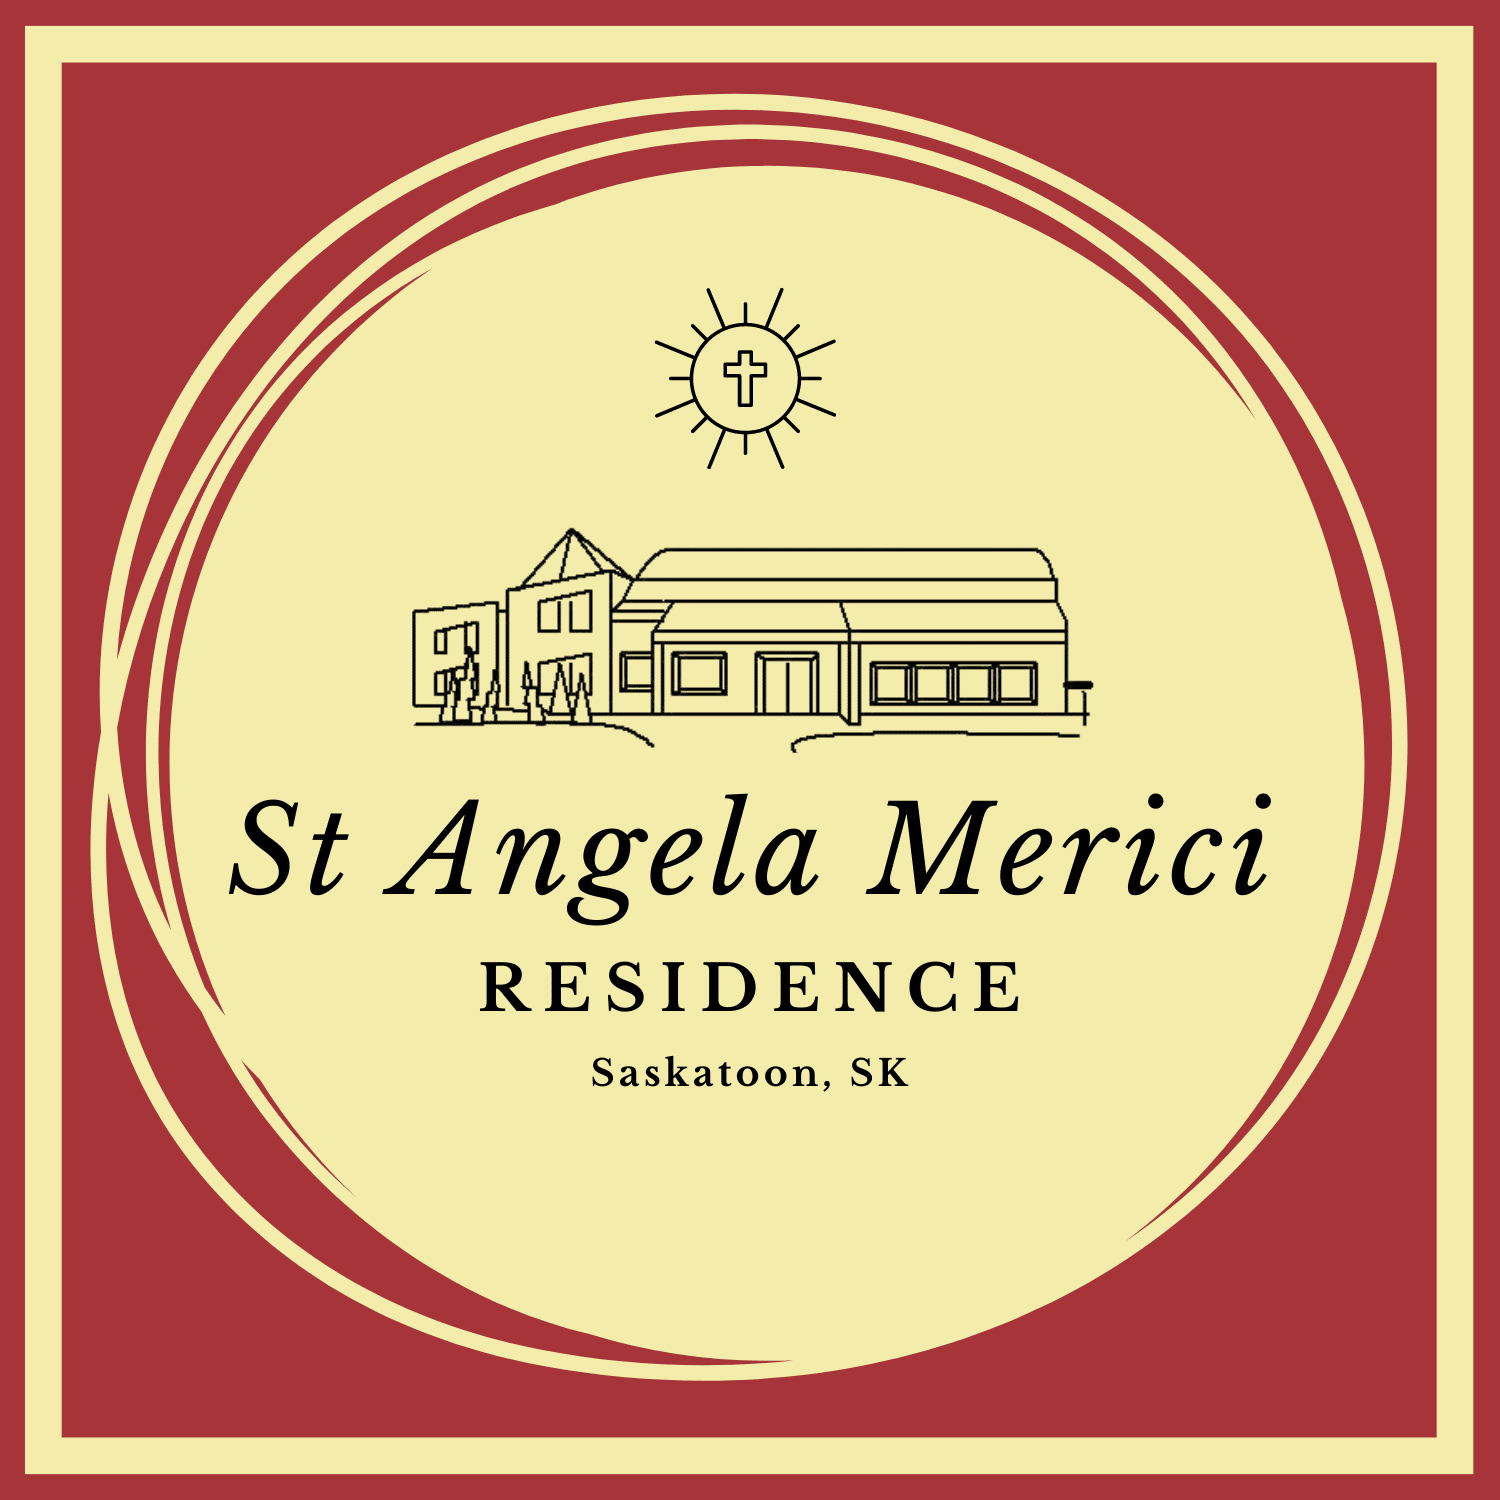 St Angela Merici Residence